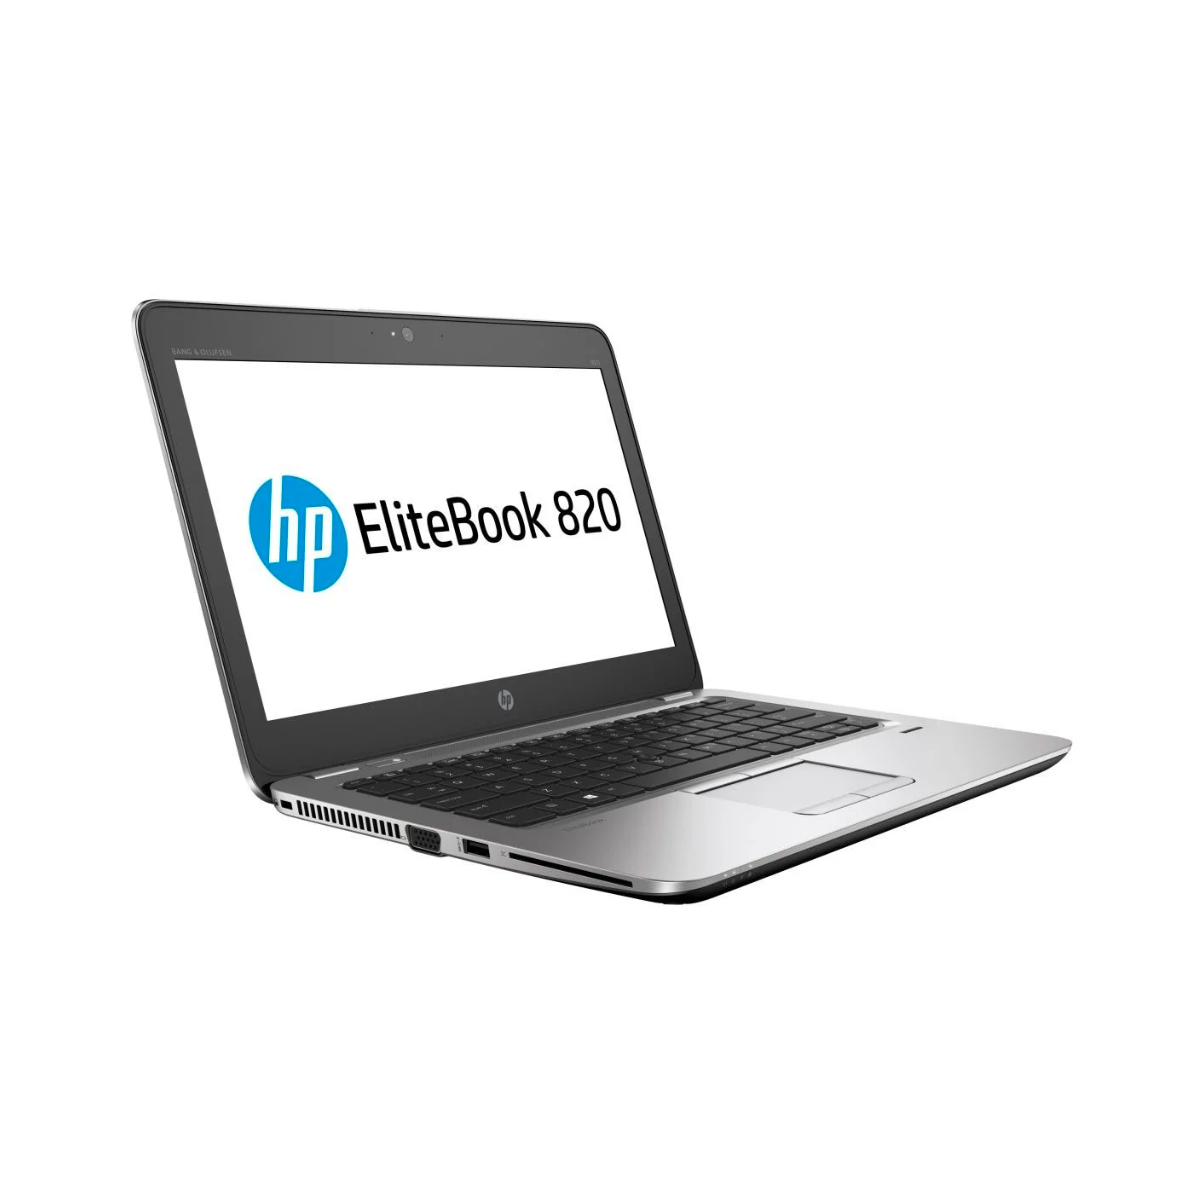 HP EliteBook 820 G3 i5 (6th Gen) 8GB RAM 180GB SSD 12.5